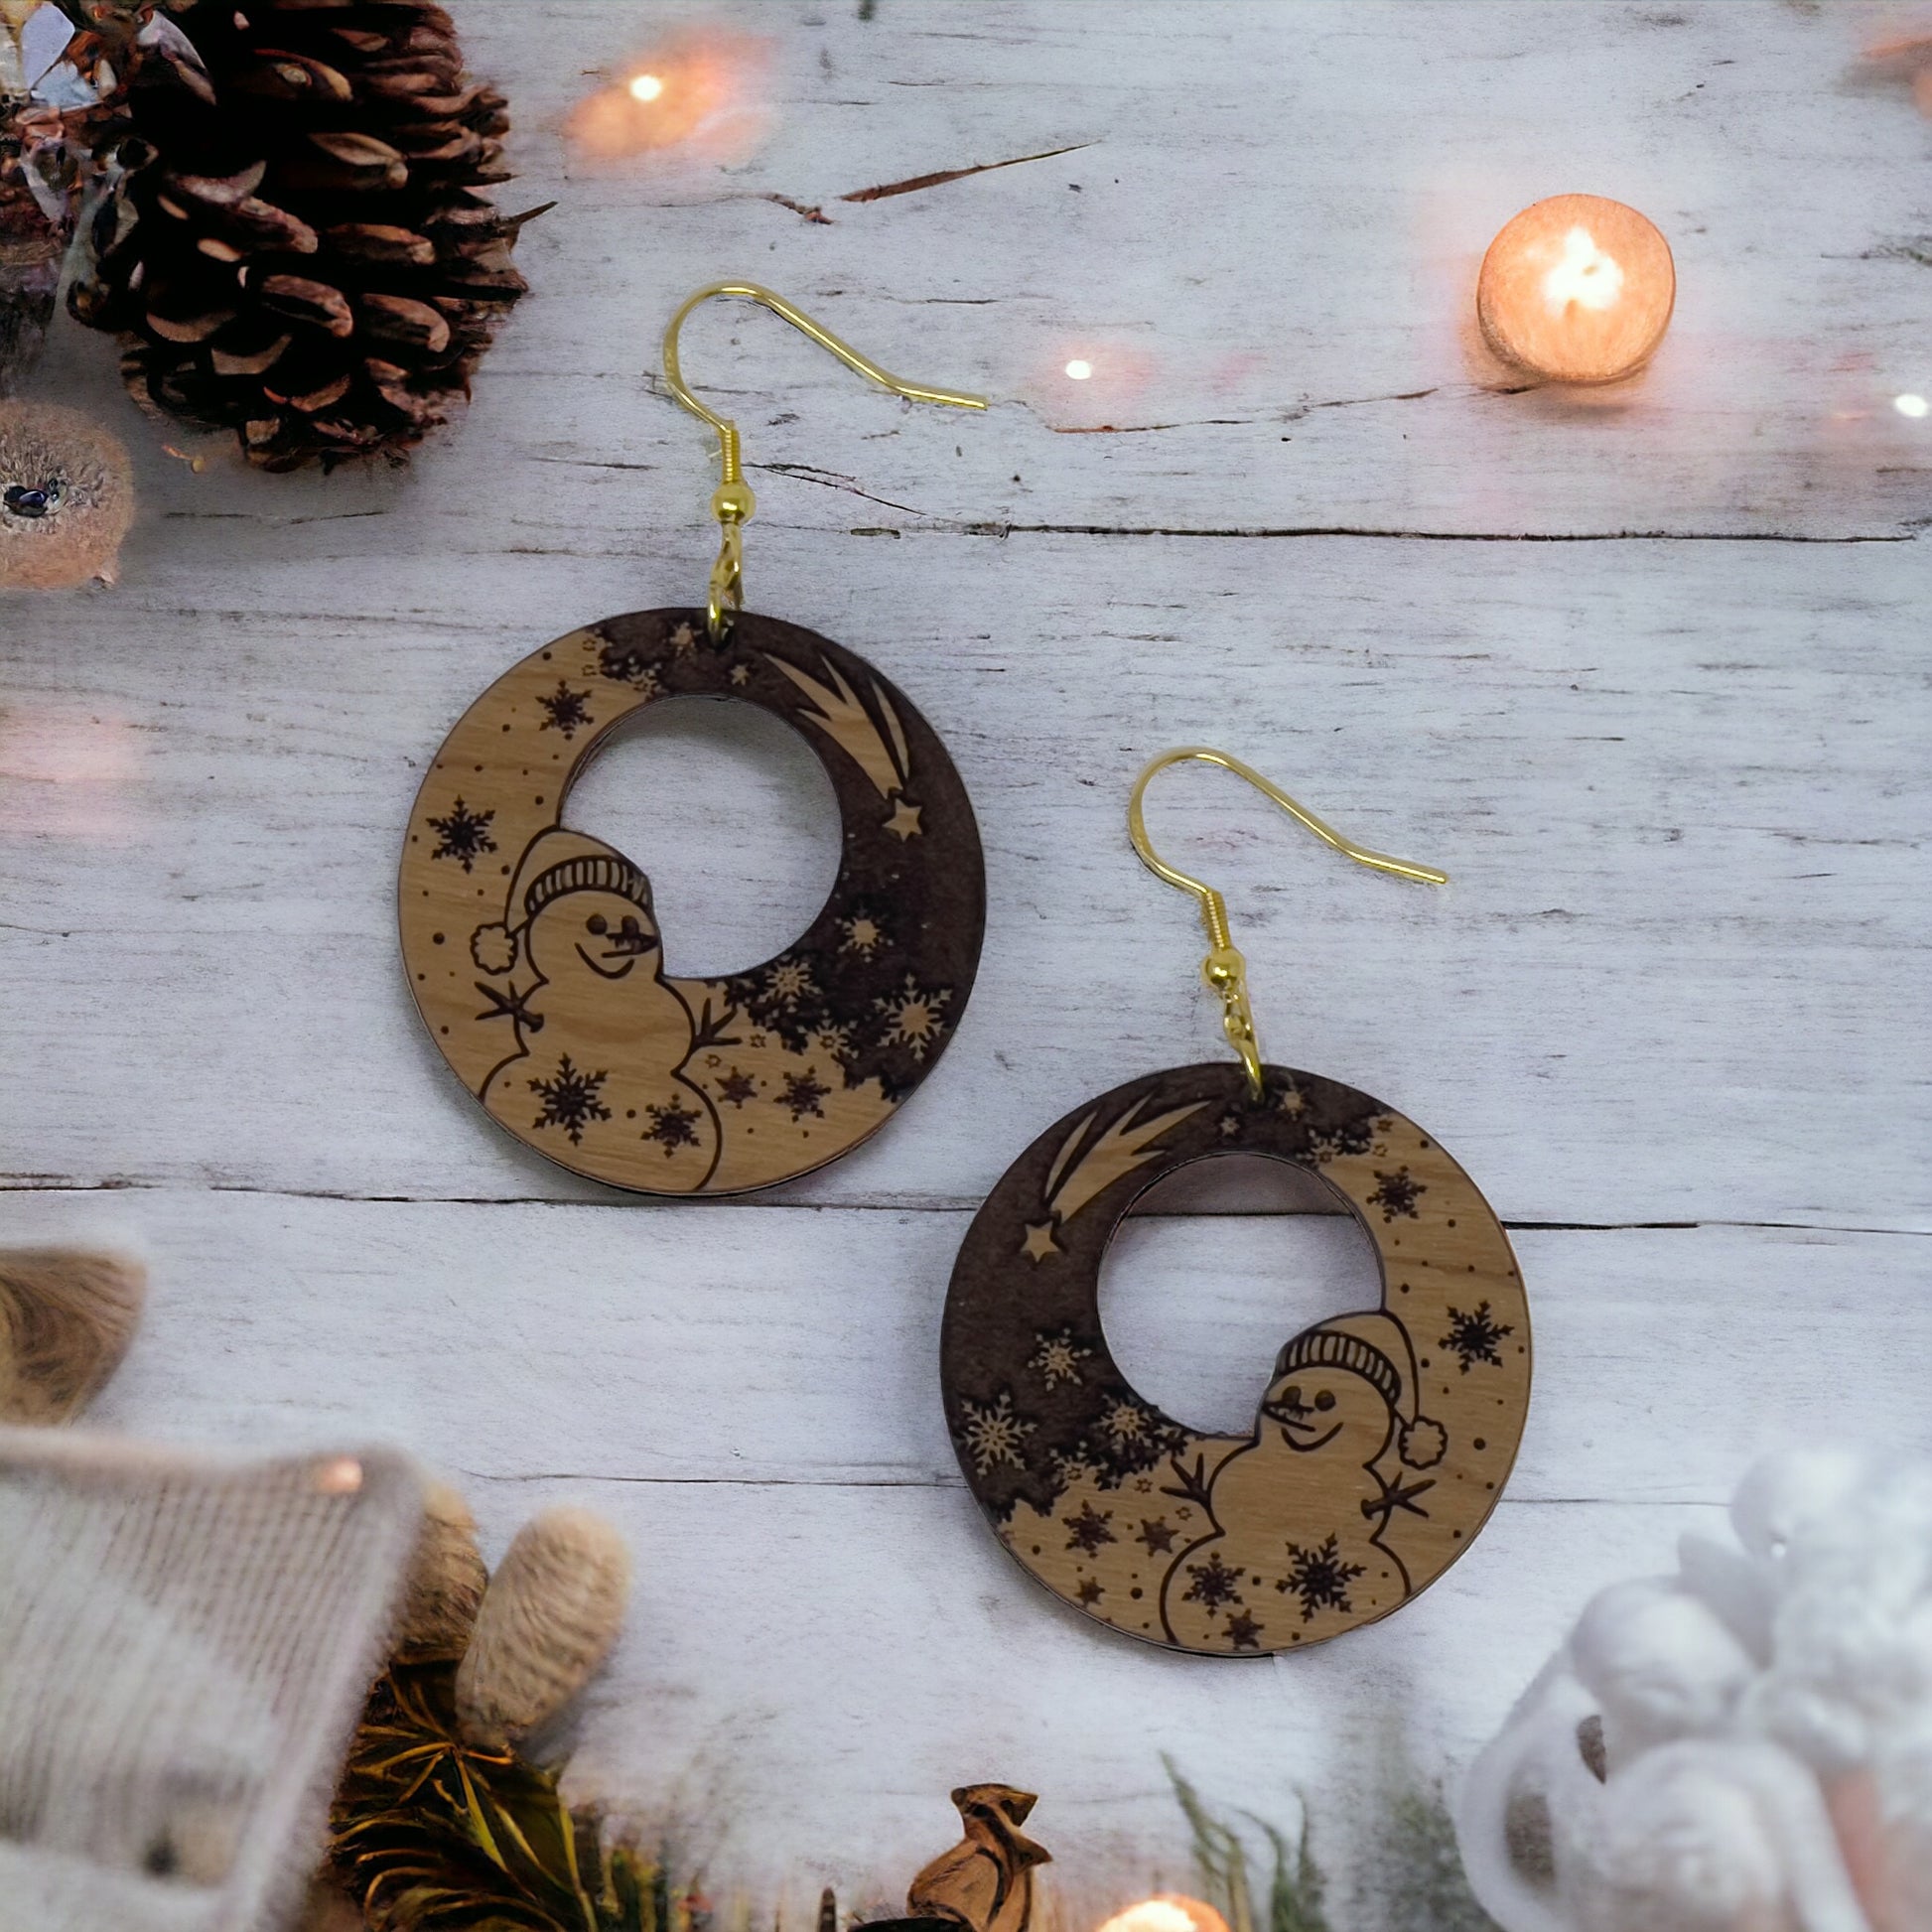 Snowman Earrings, Christmas Dangle Earrings, Fun Earrings, Cute Winter Holiday Earrings, Rustic Wood Earring, Country Xmas Jewelry